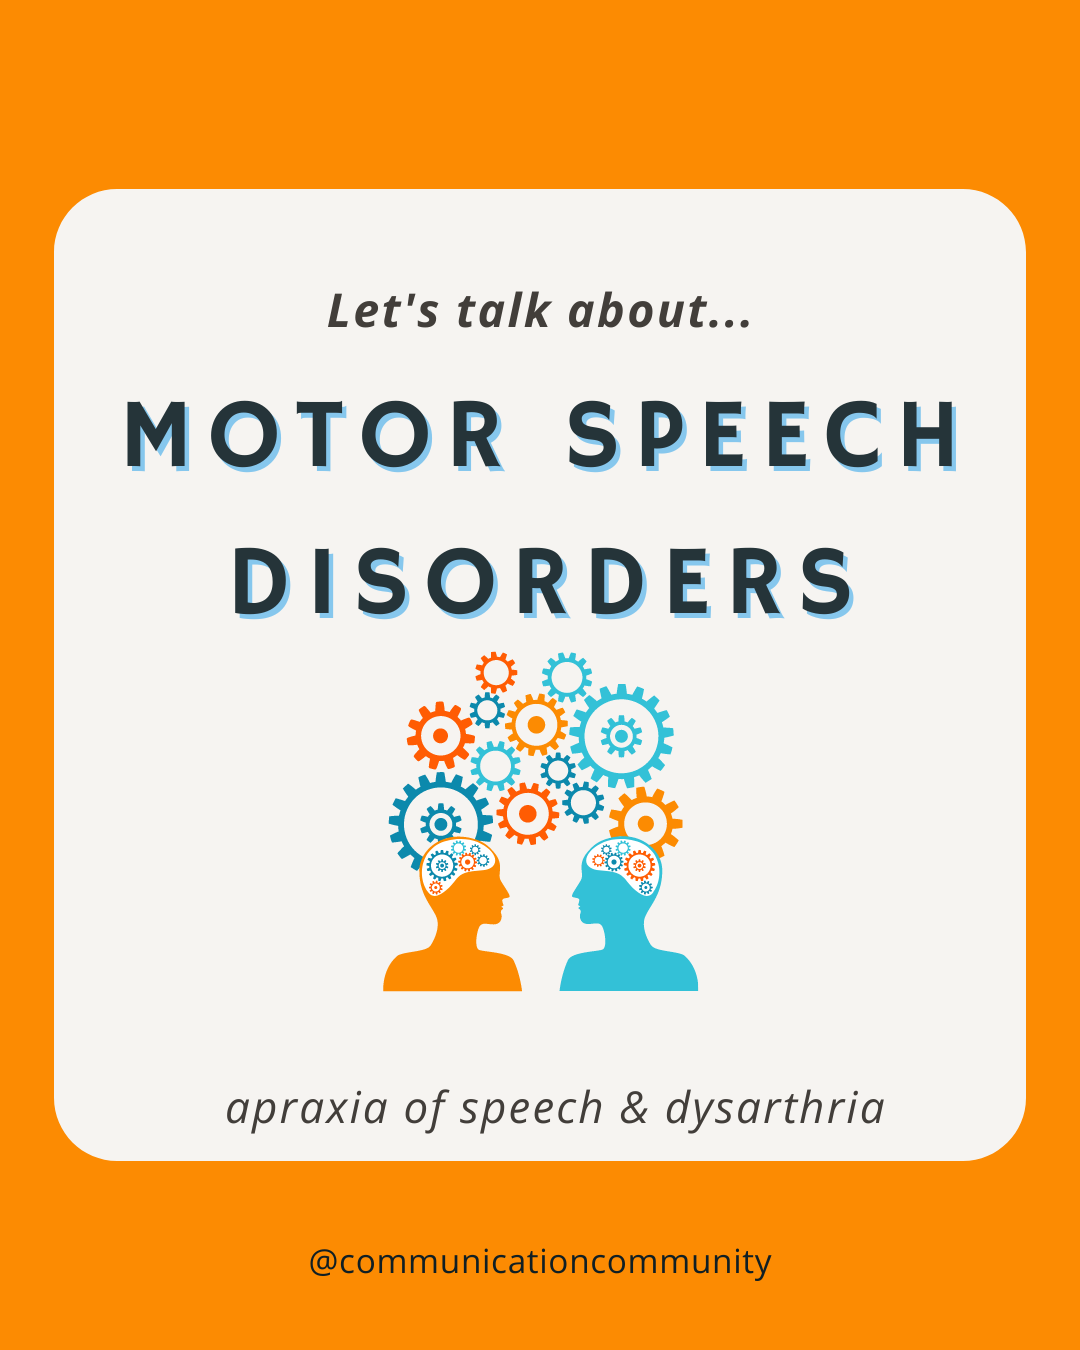 Types of Motor Speech Disorders